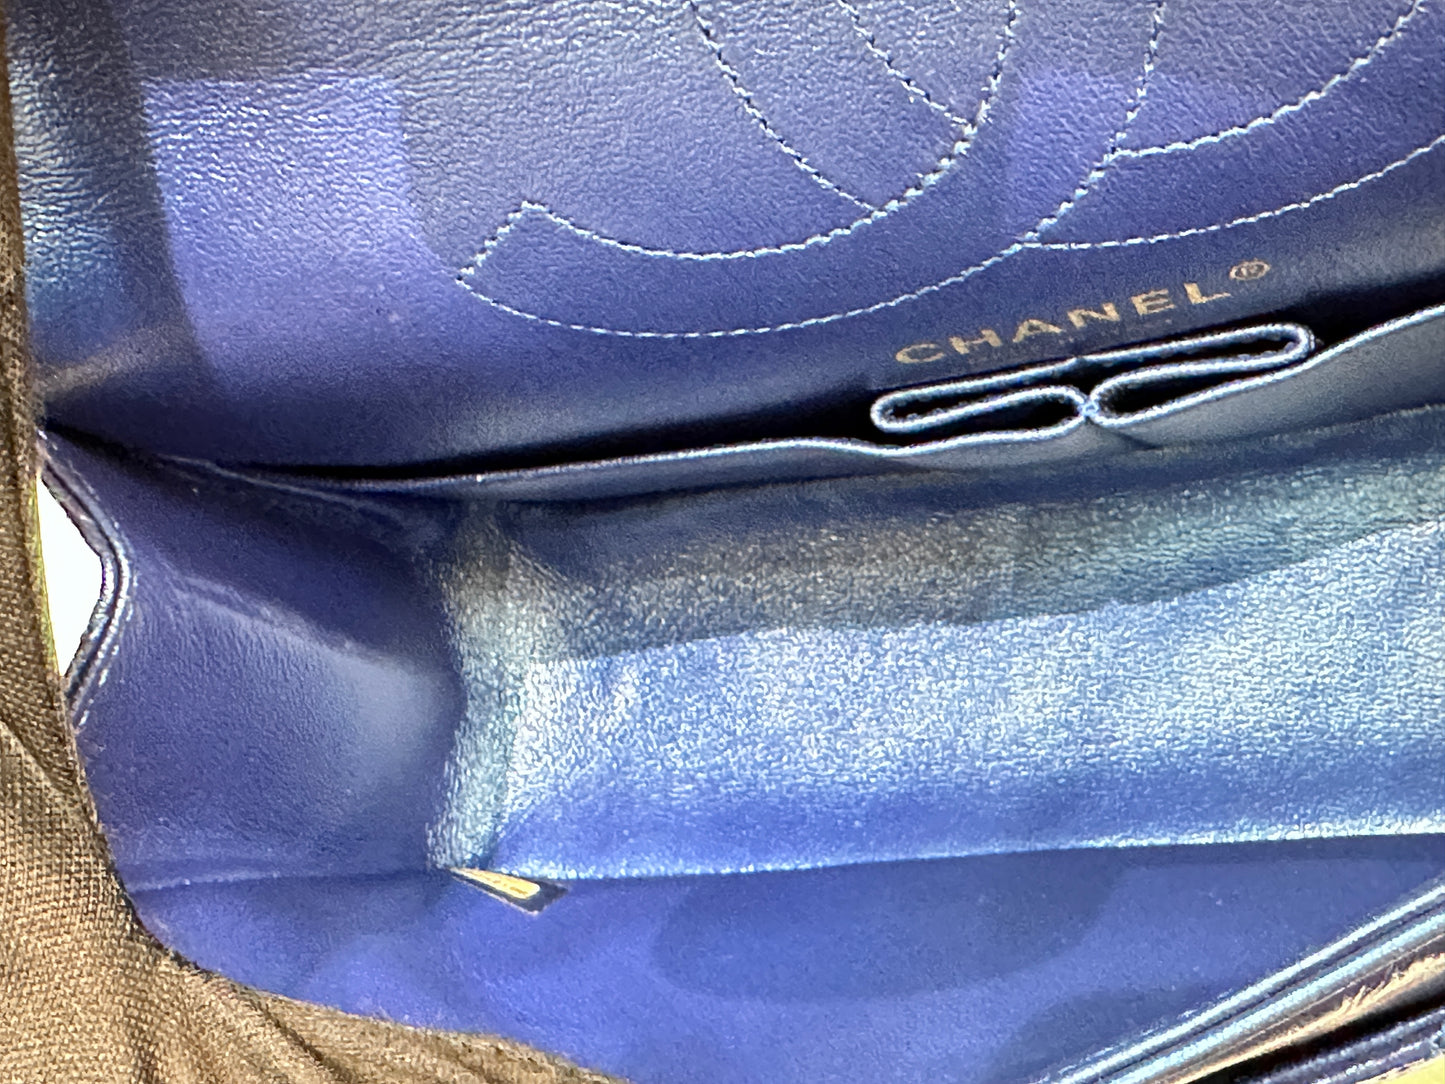 19A Chanel Iridescent Royal Electric Blue 2.55 225 Medium Reissue Flap Bag